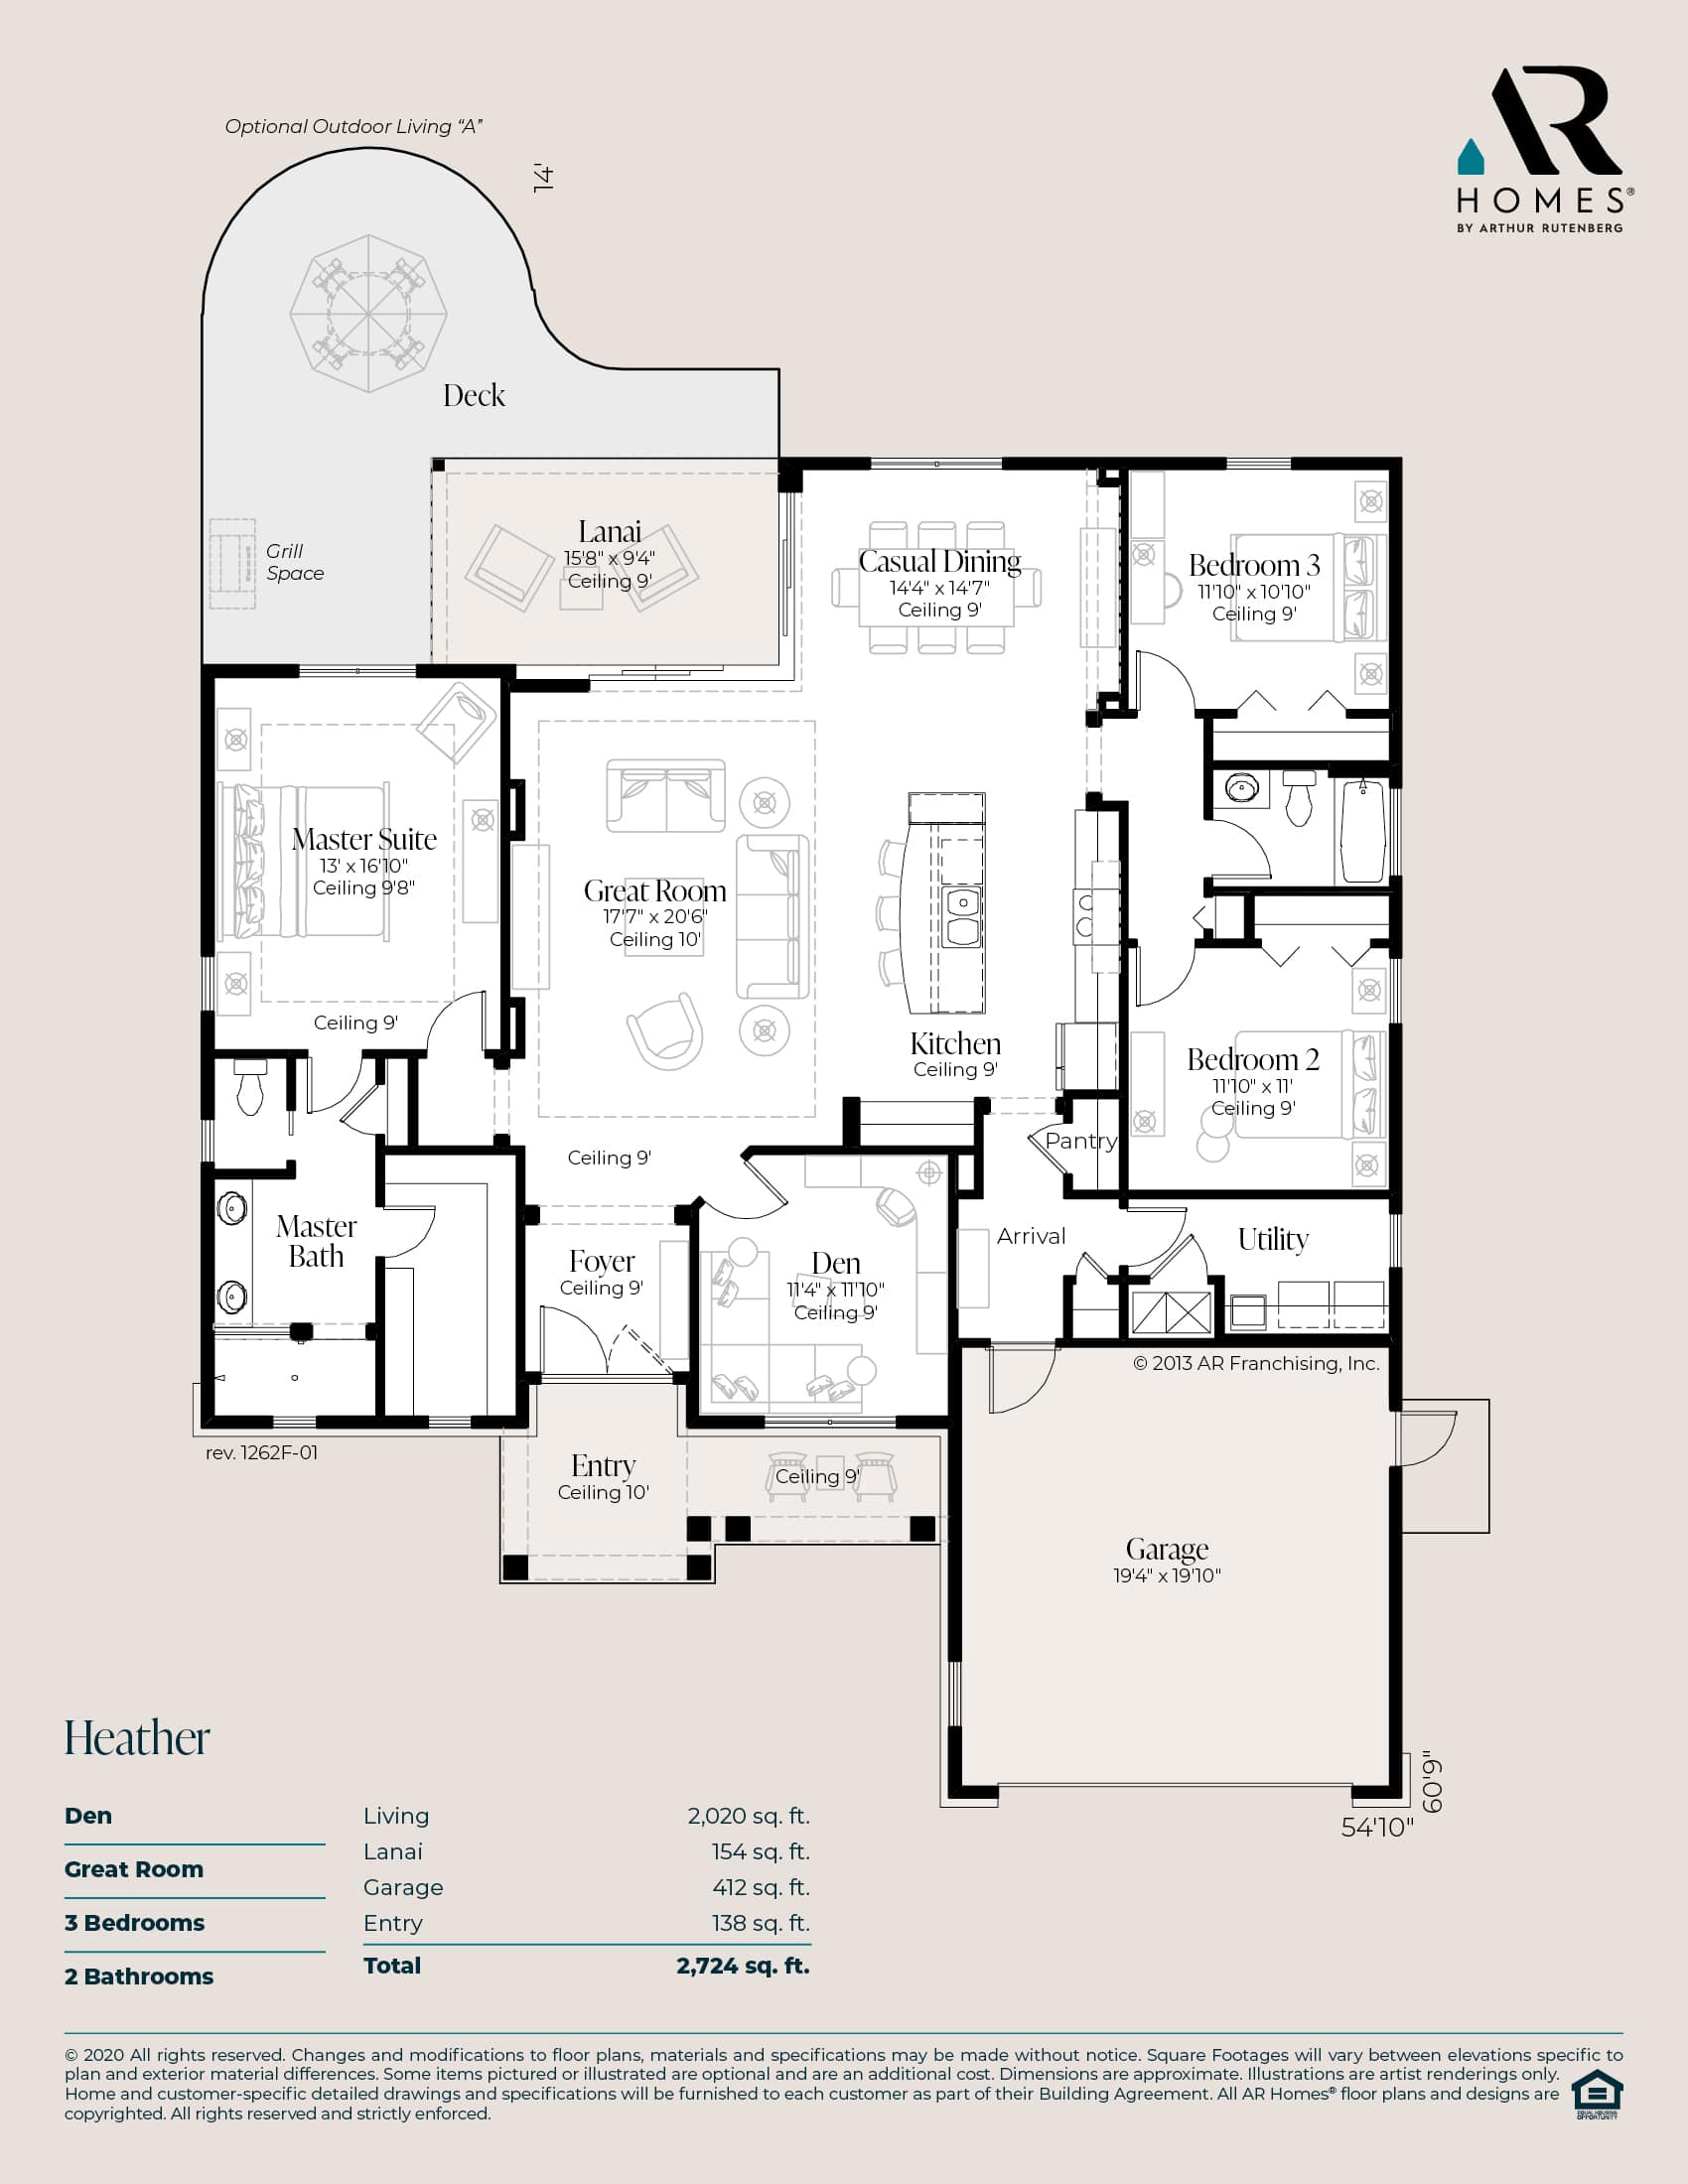 The Heather Plan Ar Homes By Arthur Rutenberg